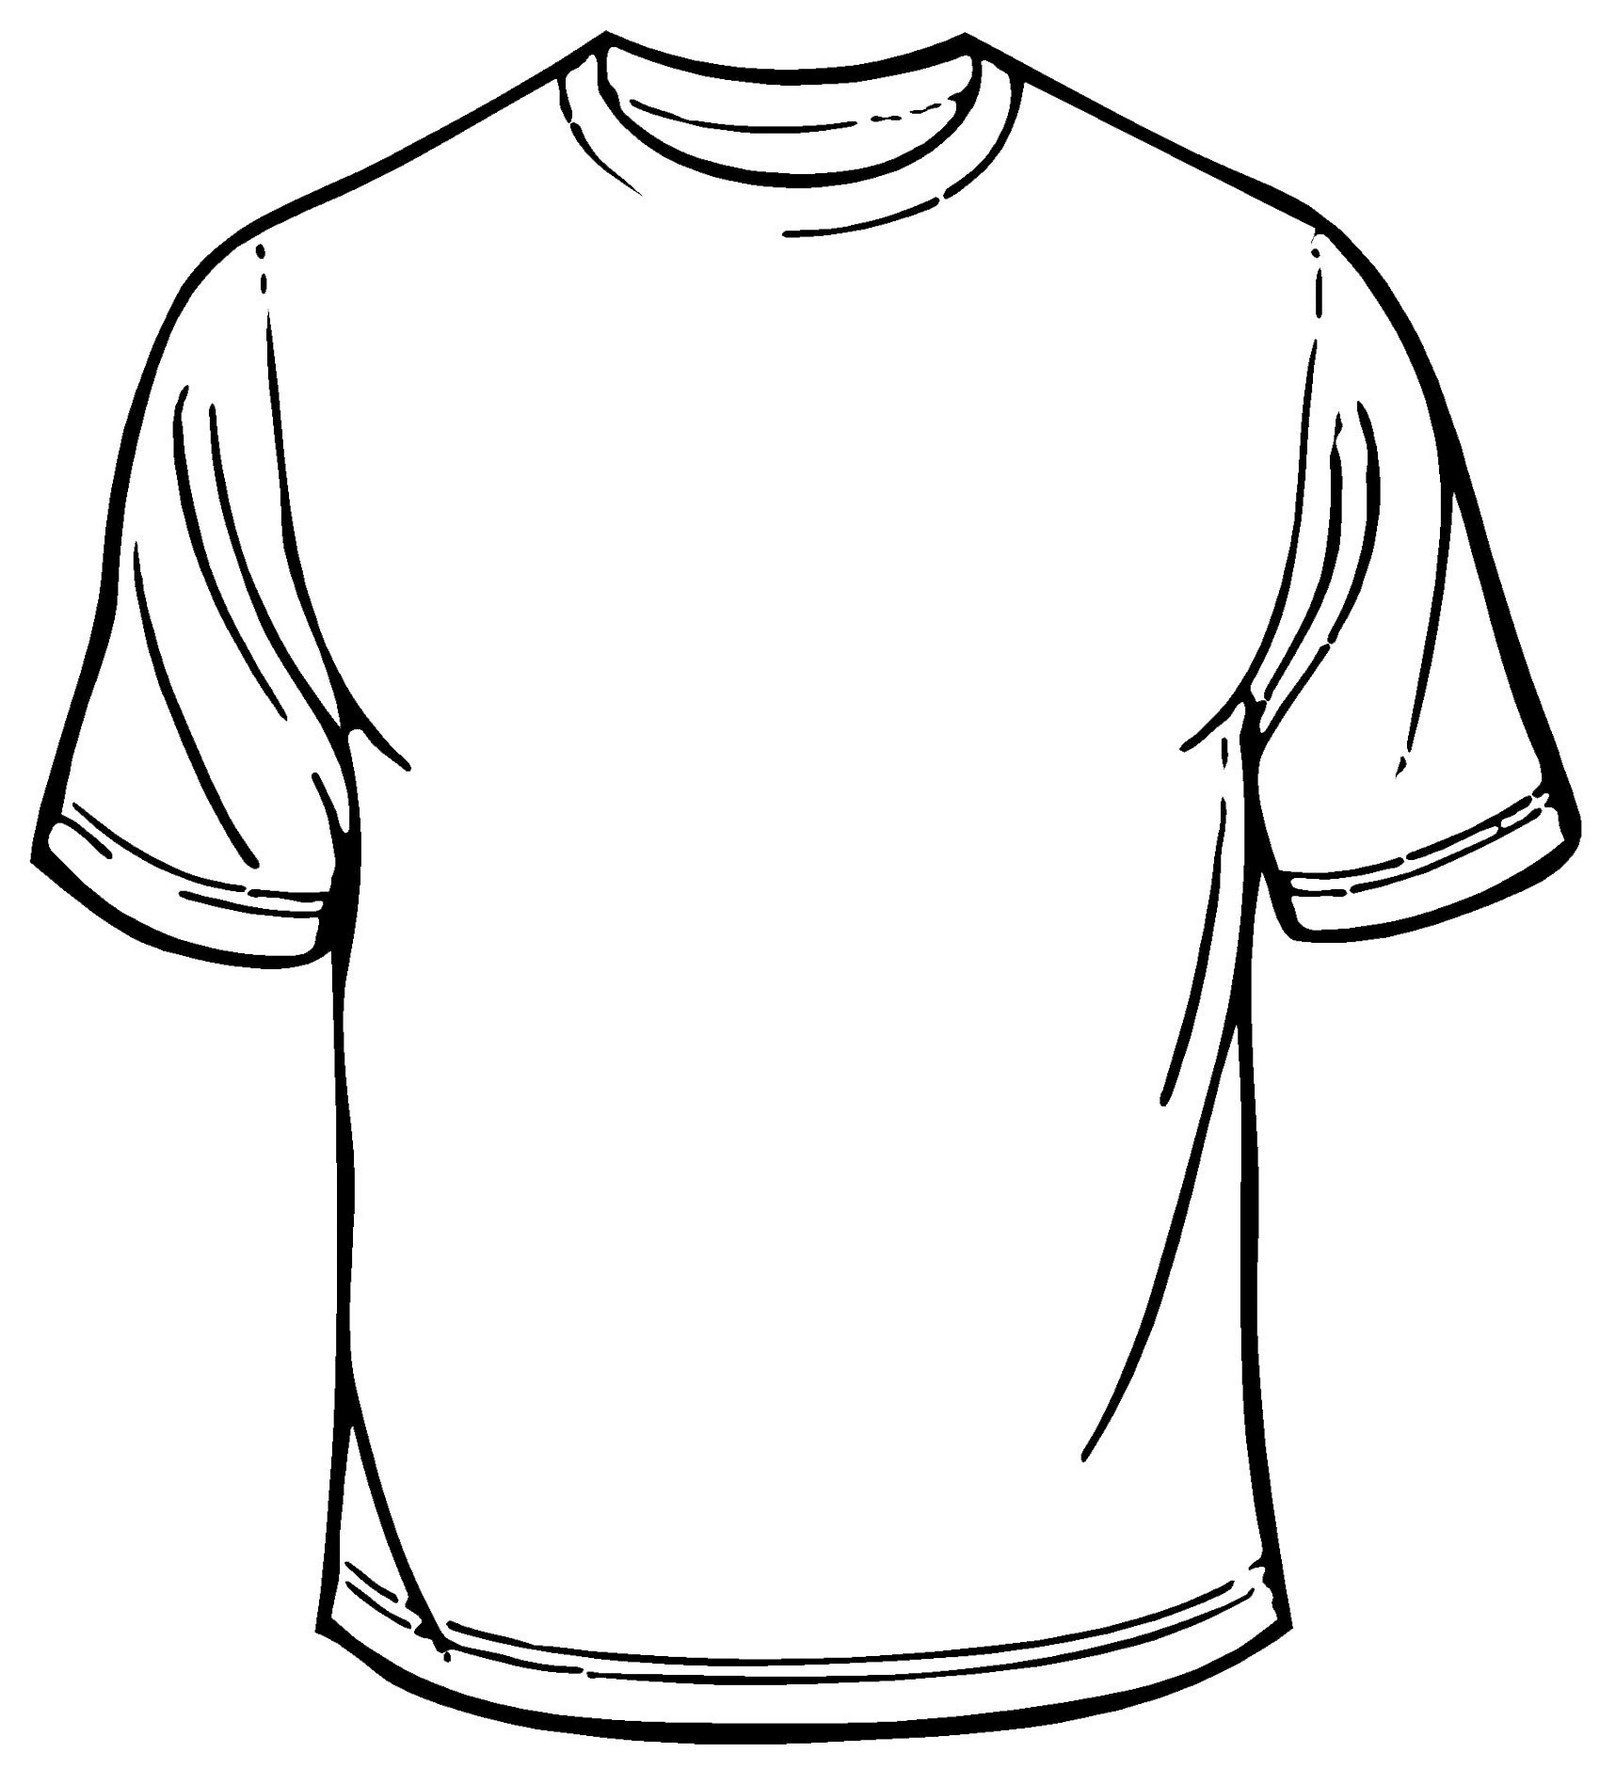 Blank T Shirt Coloring Sheet Printable | T Shirt Coloring Page For Blank Tshirt Template Printable